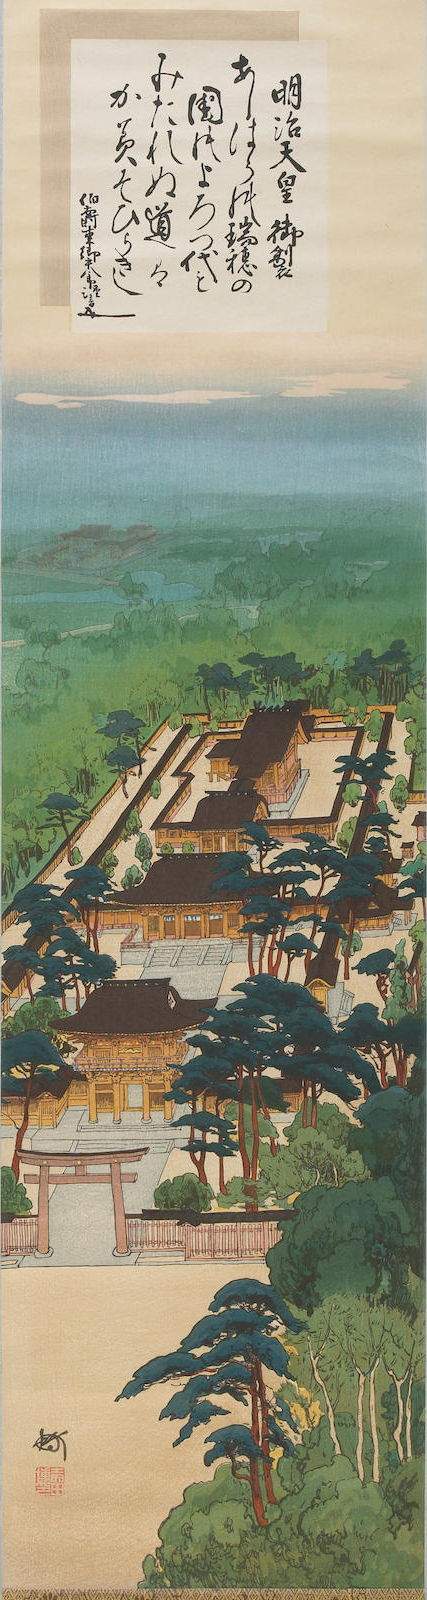 Sacred Garden in Meiji Shrine woodblock print